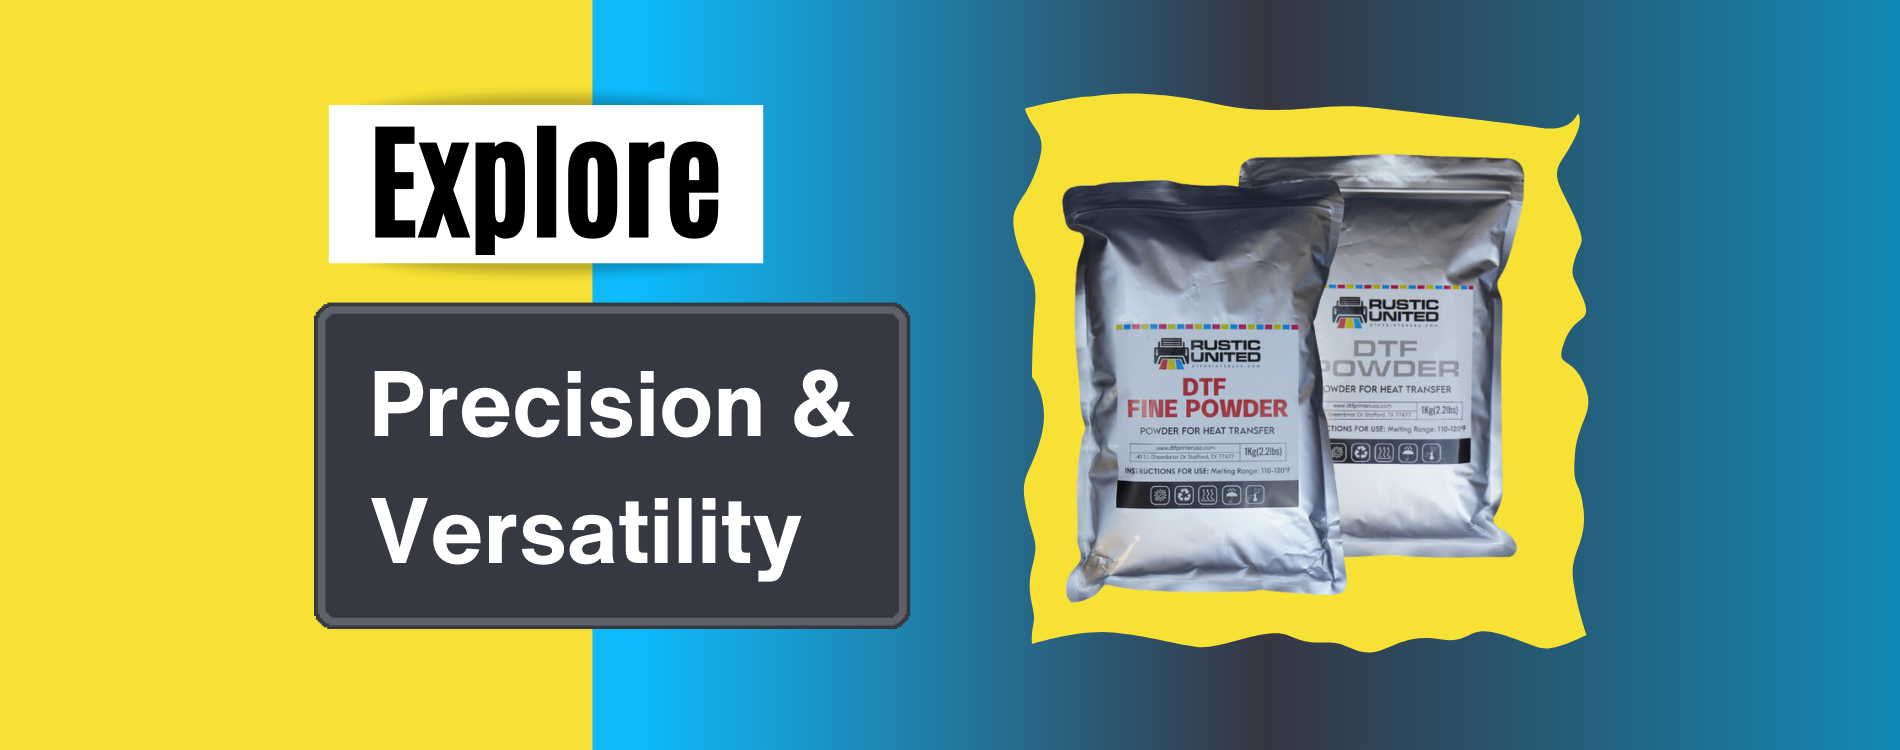 1Kg (2.2lbs) Premium Medium DTF Powder Direct to Film Digital Transfer  Powder Hot Melt Adhesive